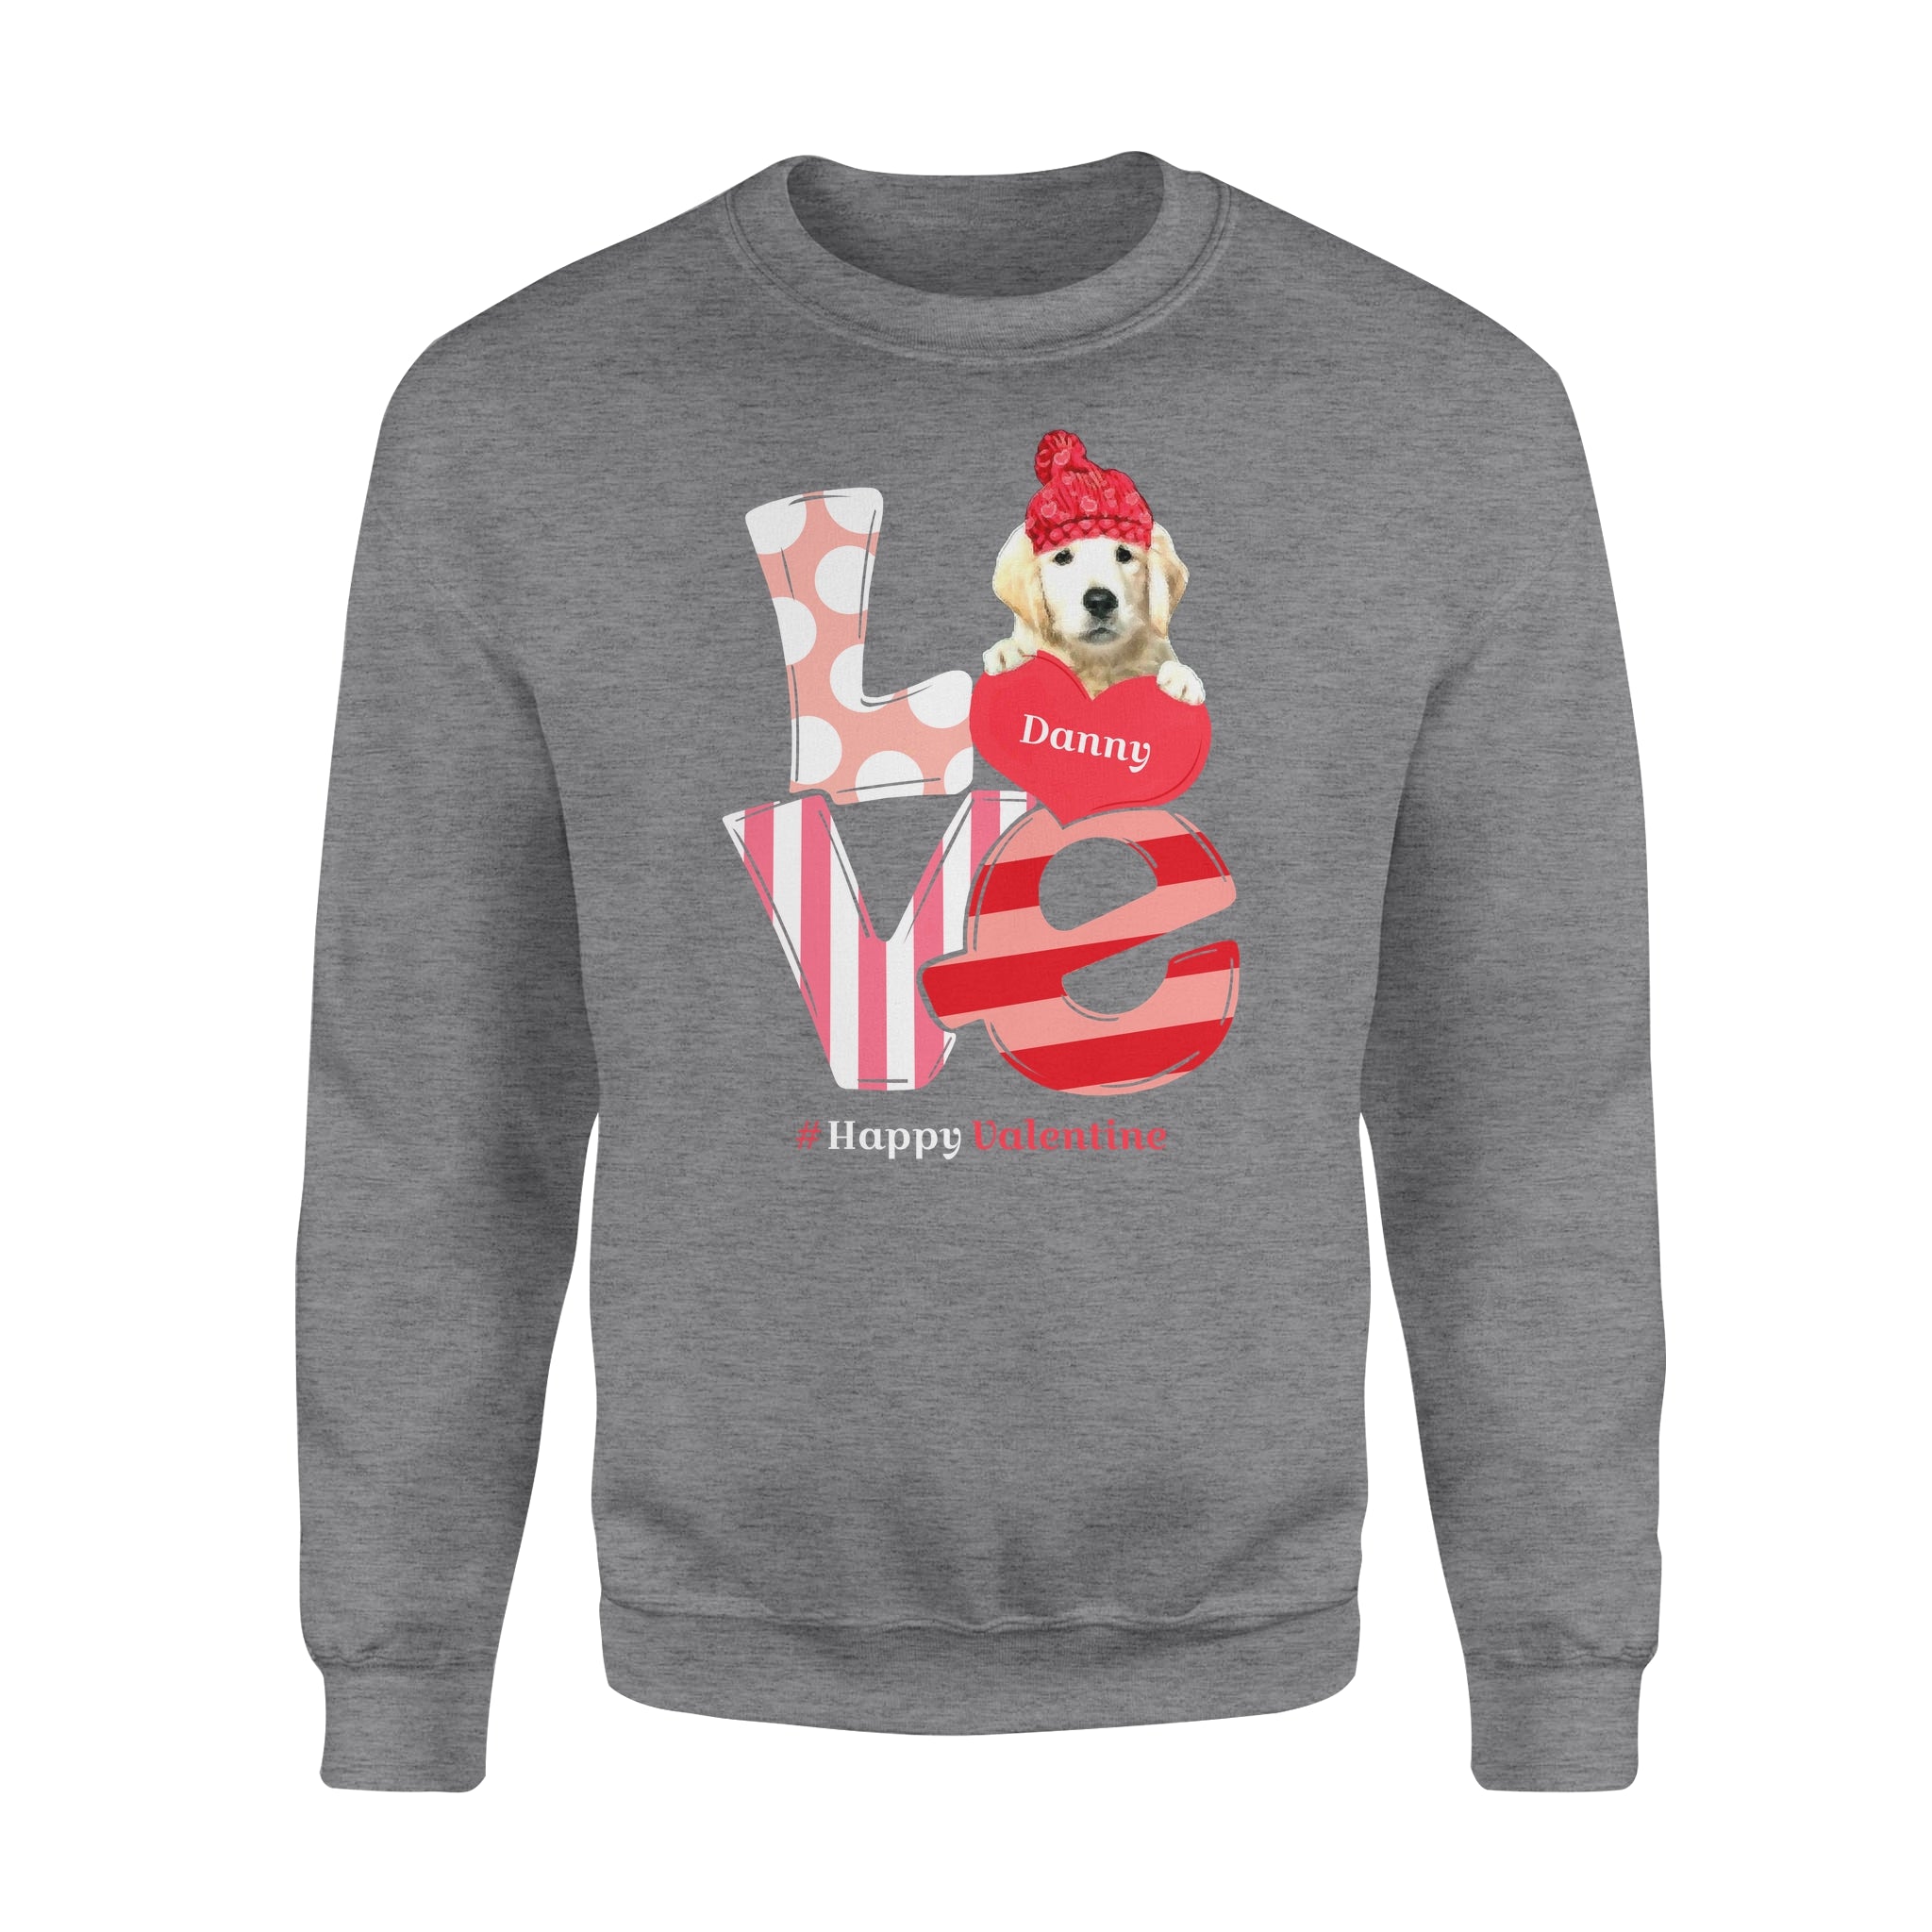 Personalized Valentine Dog Gift Idea - # Happy Valentine For Your Lover - Standard Crew Neck Sweatshirt